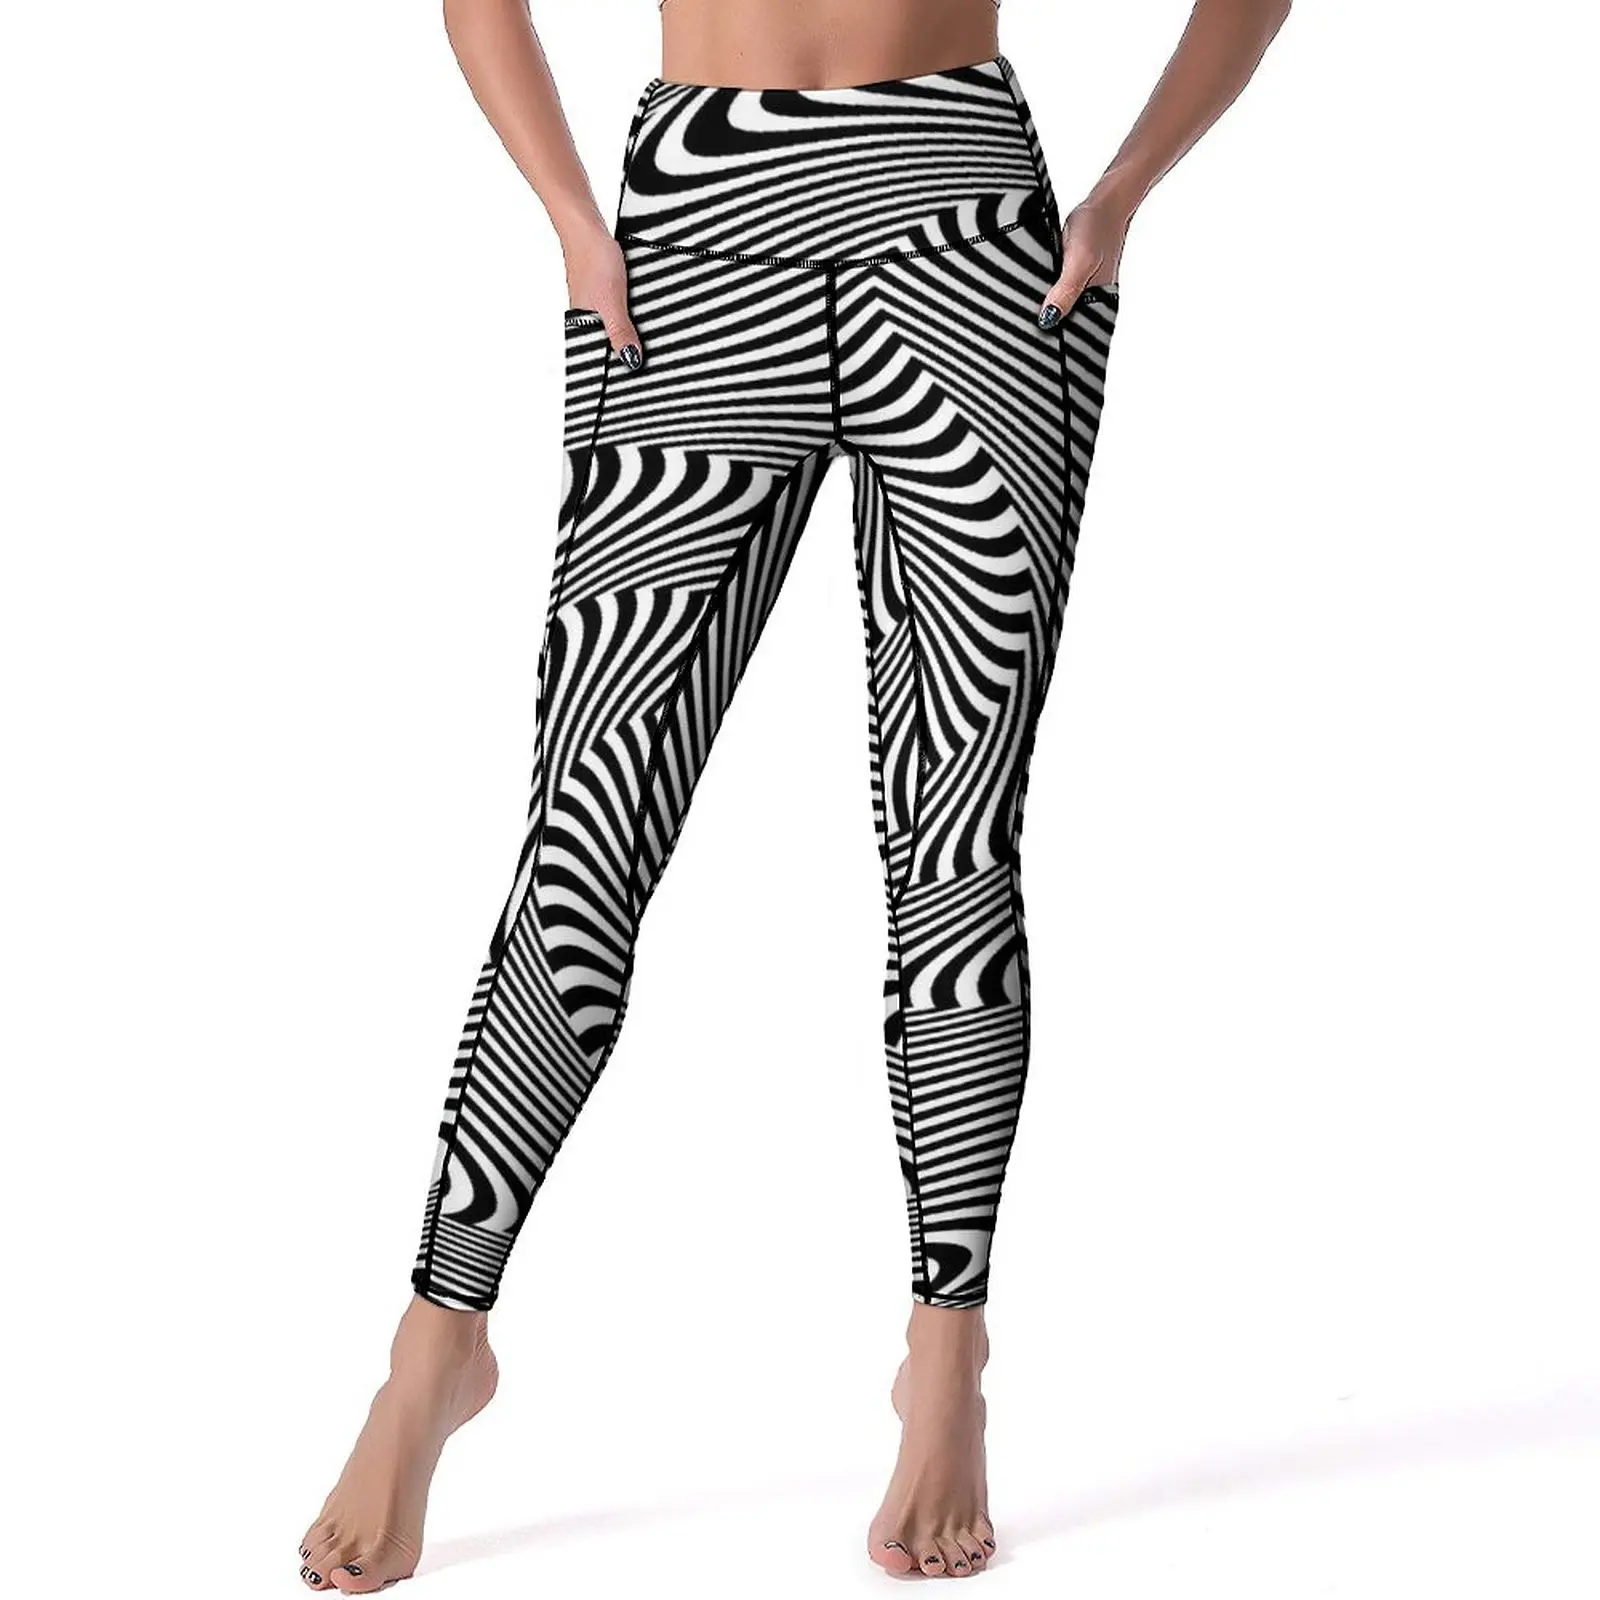 

Black Curve Leggings Sexy Swirl Lines Print Fitness Running Yoga Pants High Waist Stretchy Sports Tights Retro Design Leggins